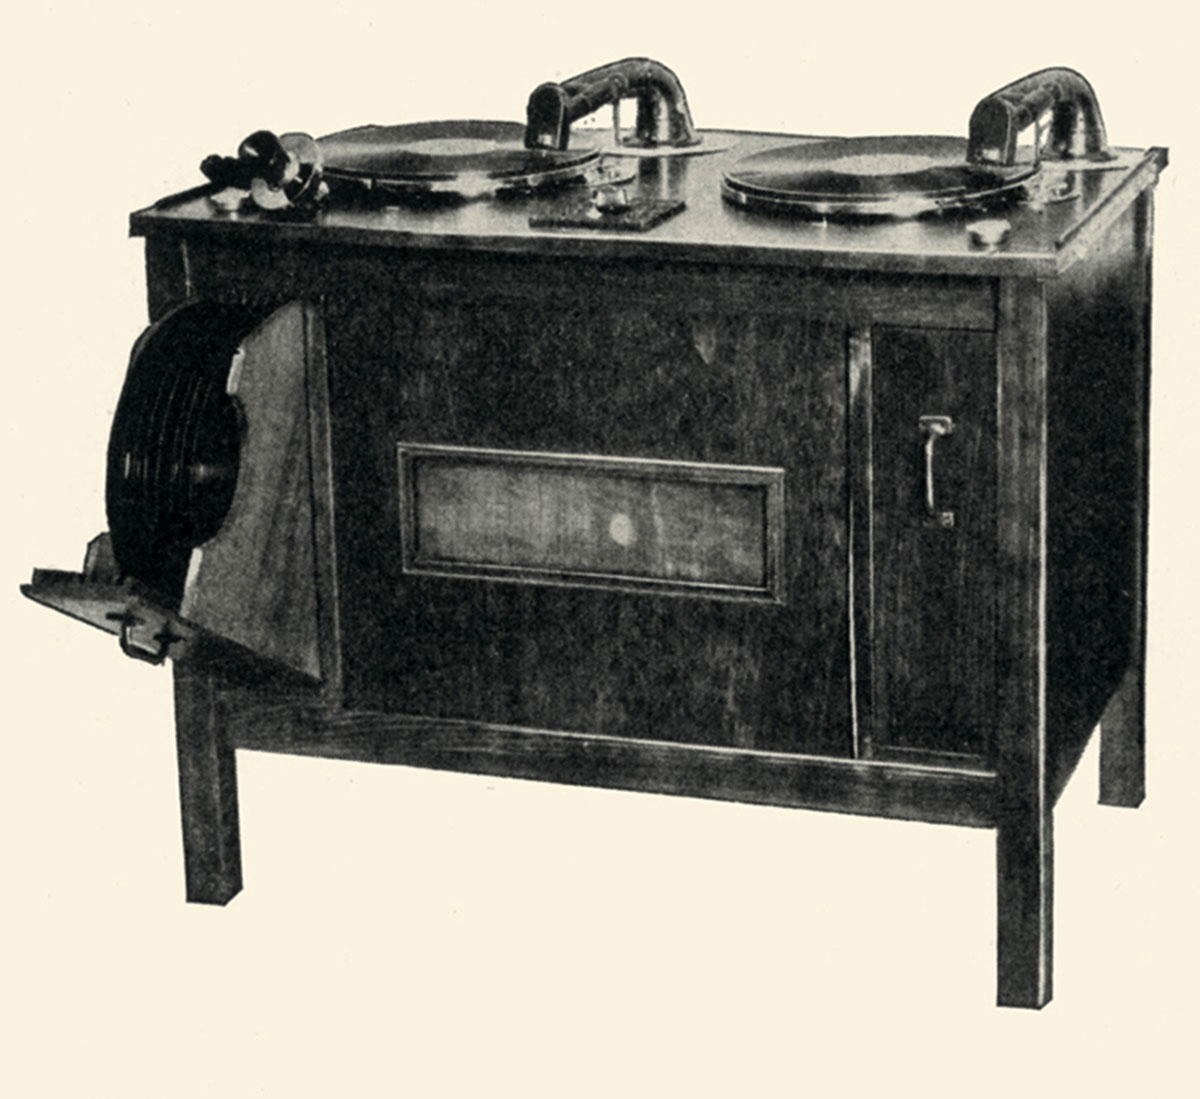 A circa 1929 photograph of a motio-tone non-sync turntable unit in a wooden desk cabinet. 